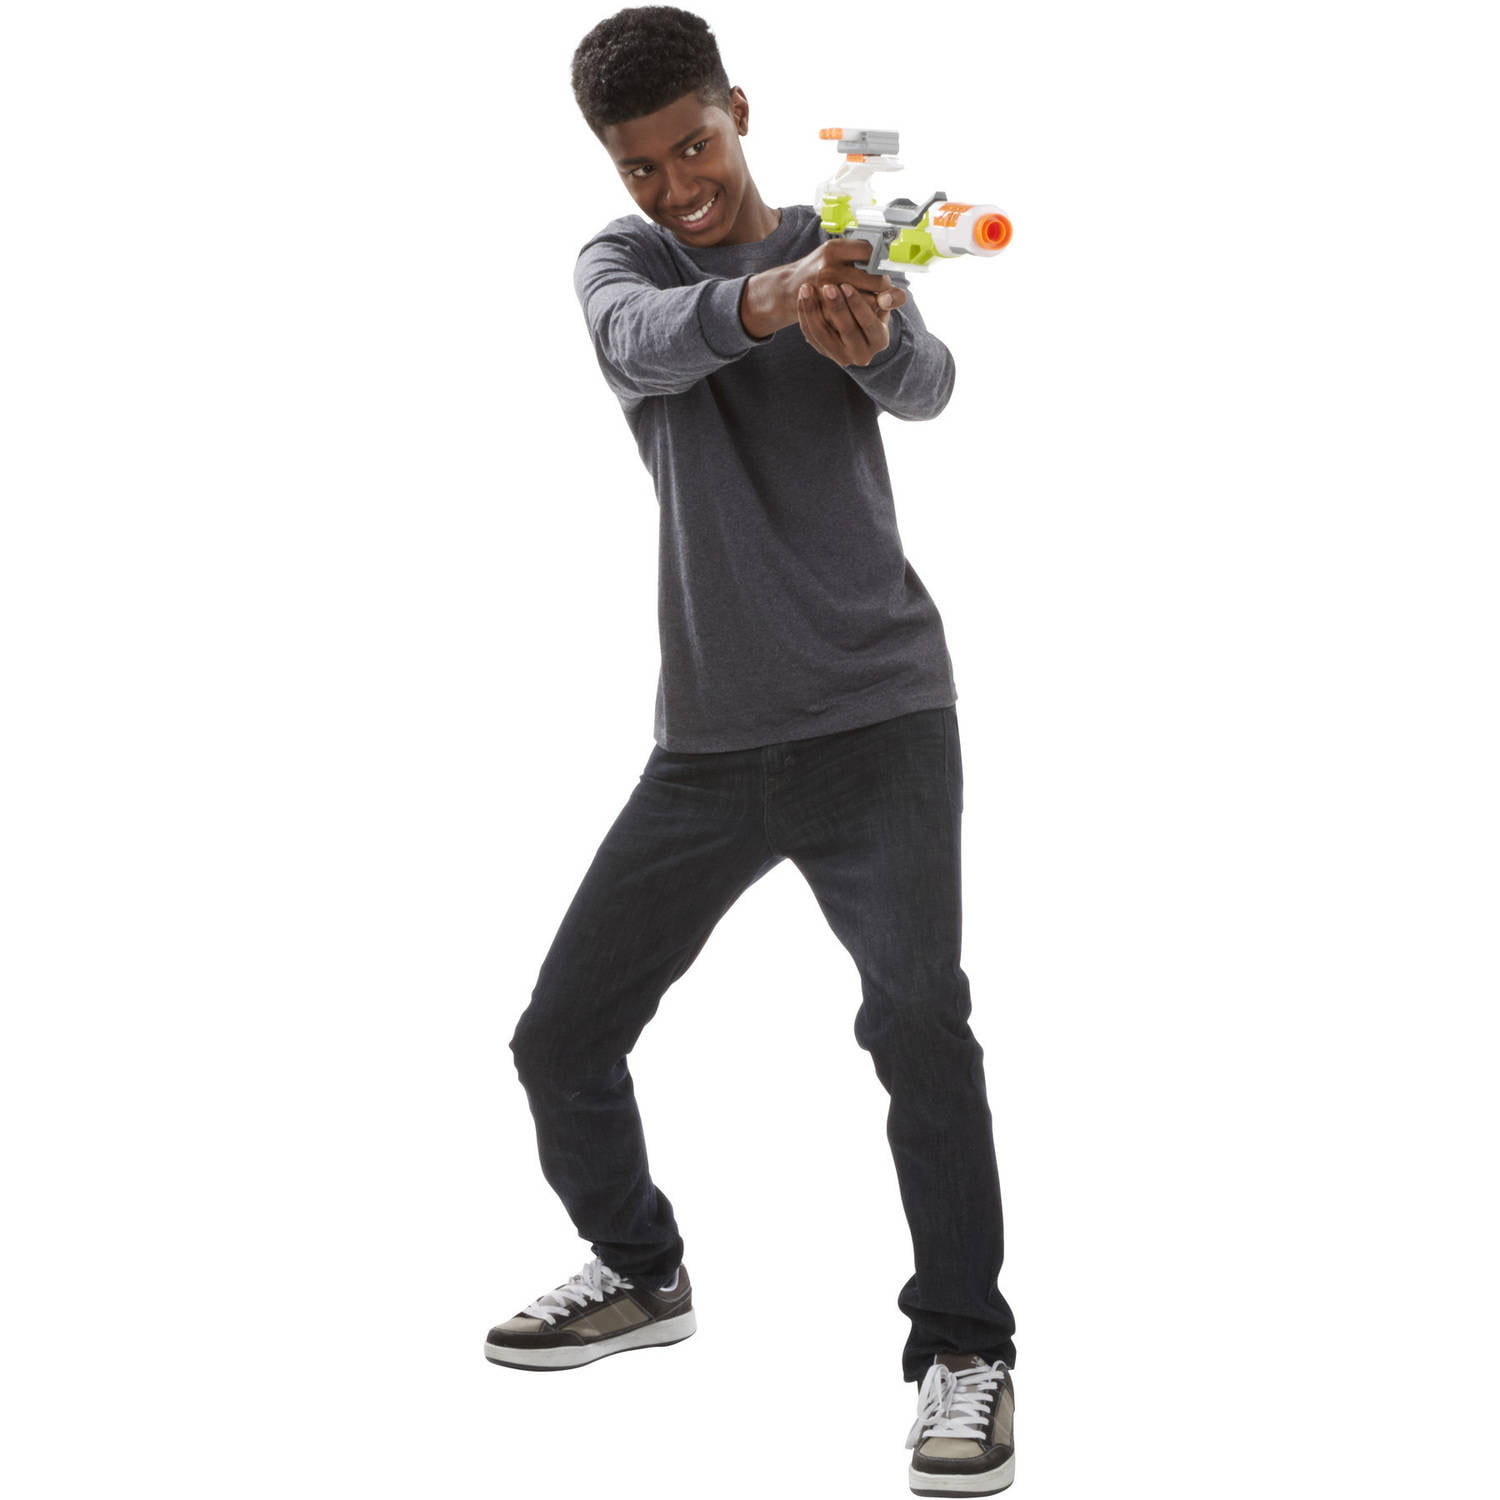 NERF N-strike Modulus IonFire Dart Blaster Kids Toy Hasbro for sale online 